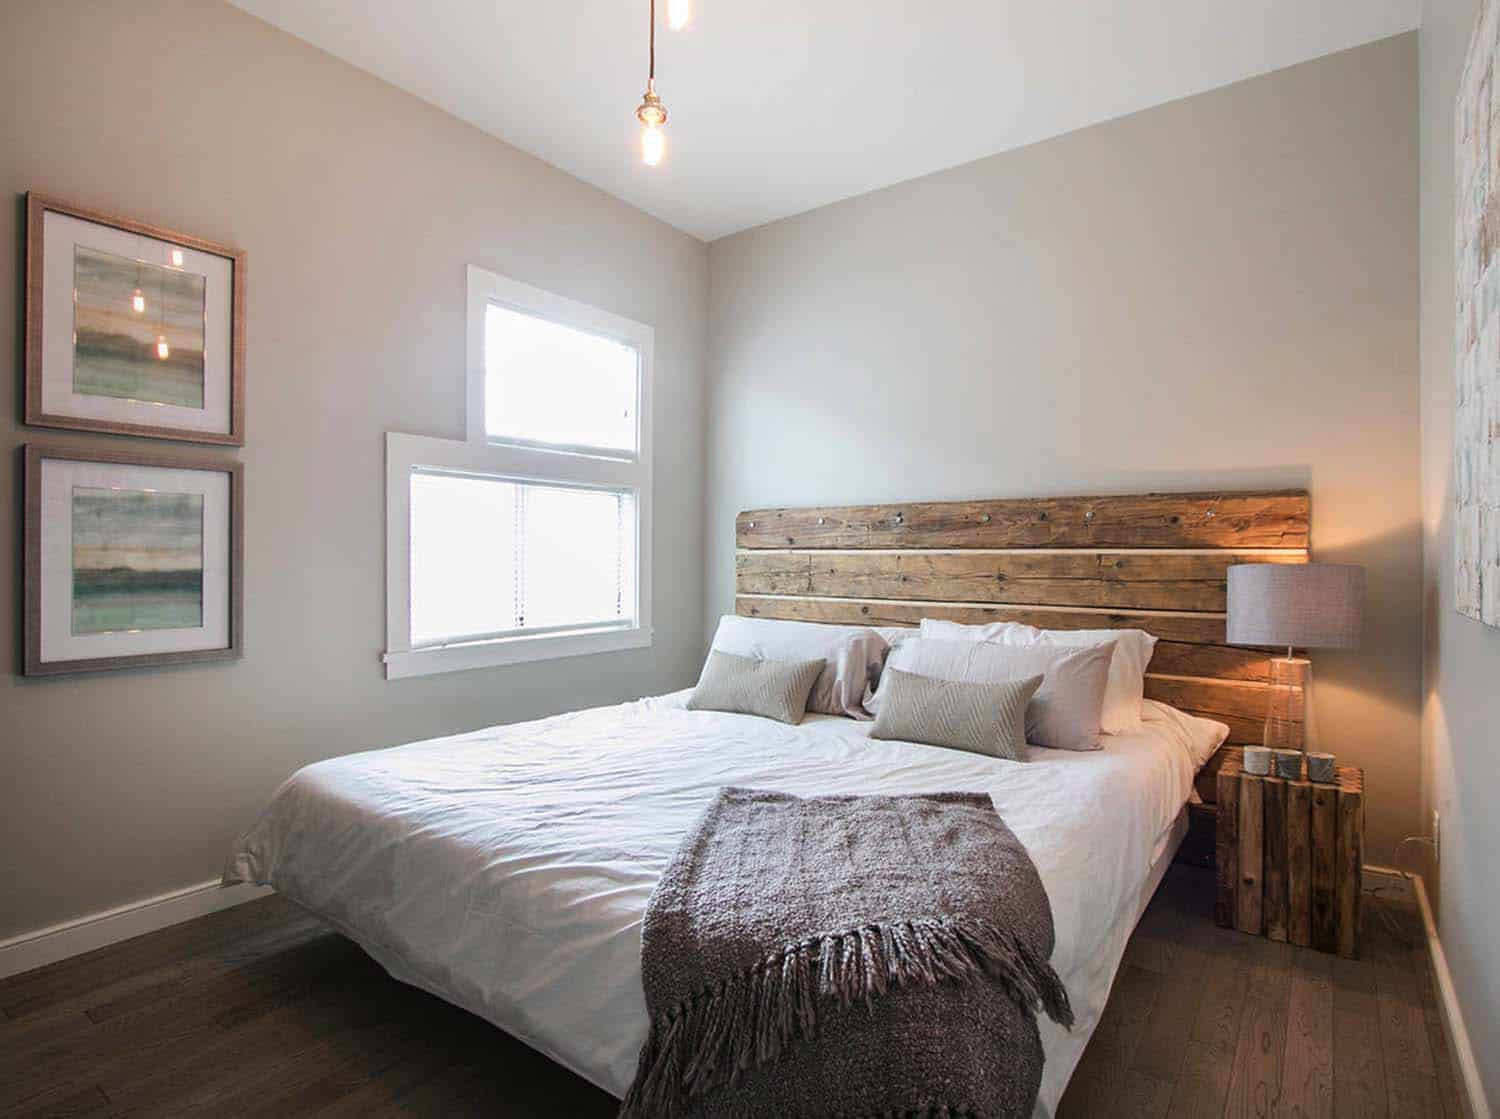 Master Bedroom Ideas
 30 Small yet amazingly cozy master bedroom retreats